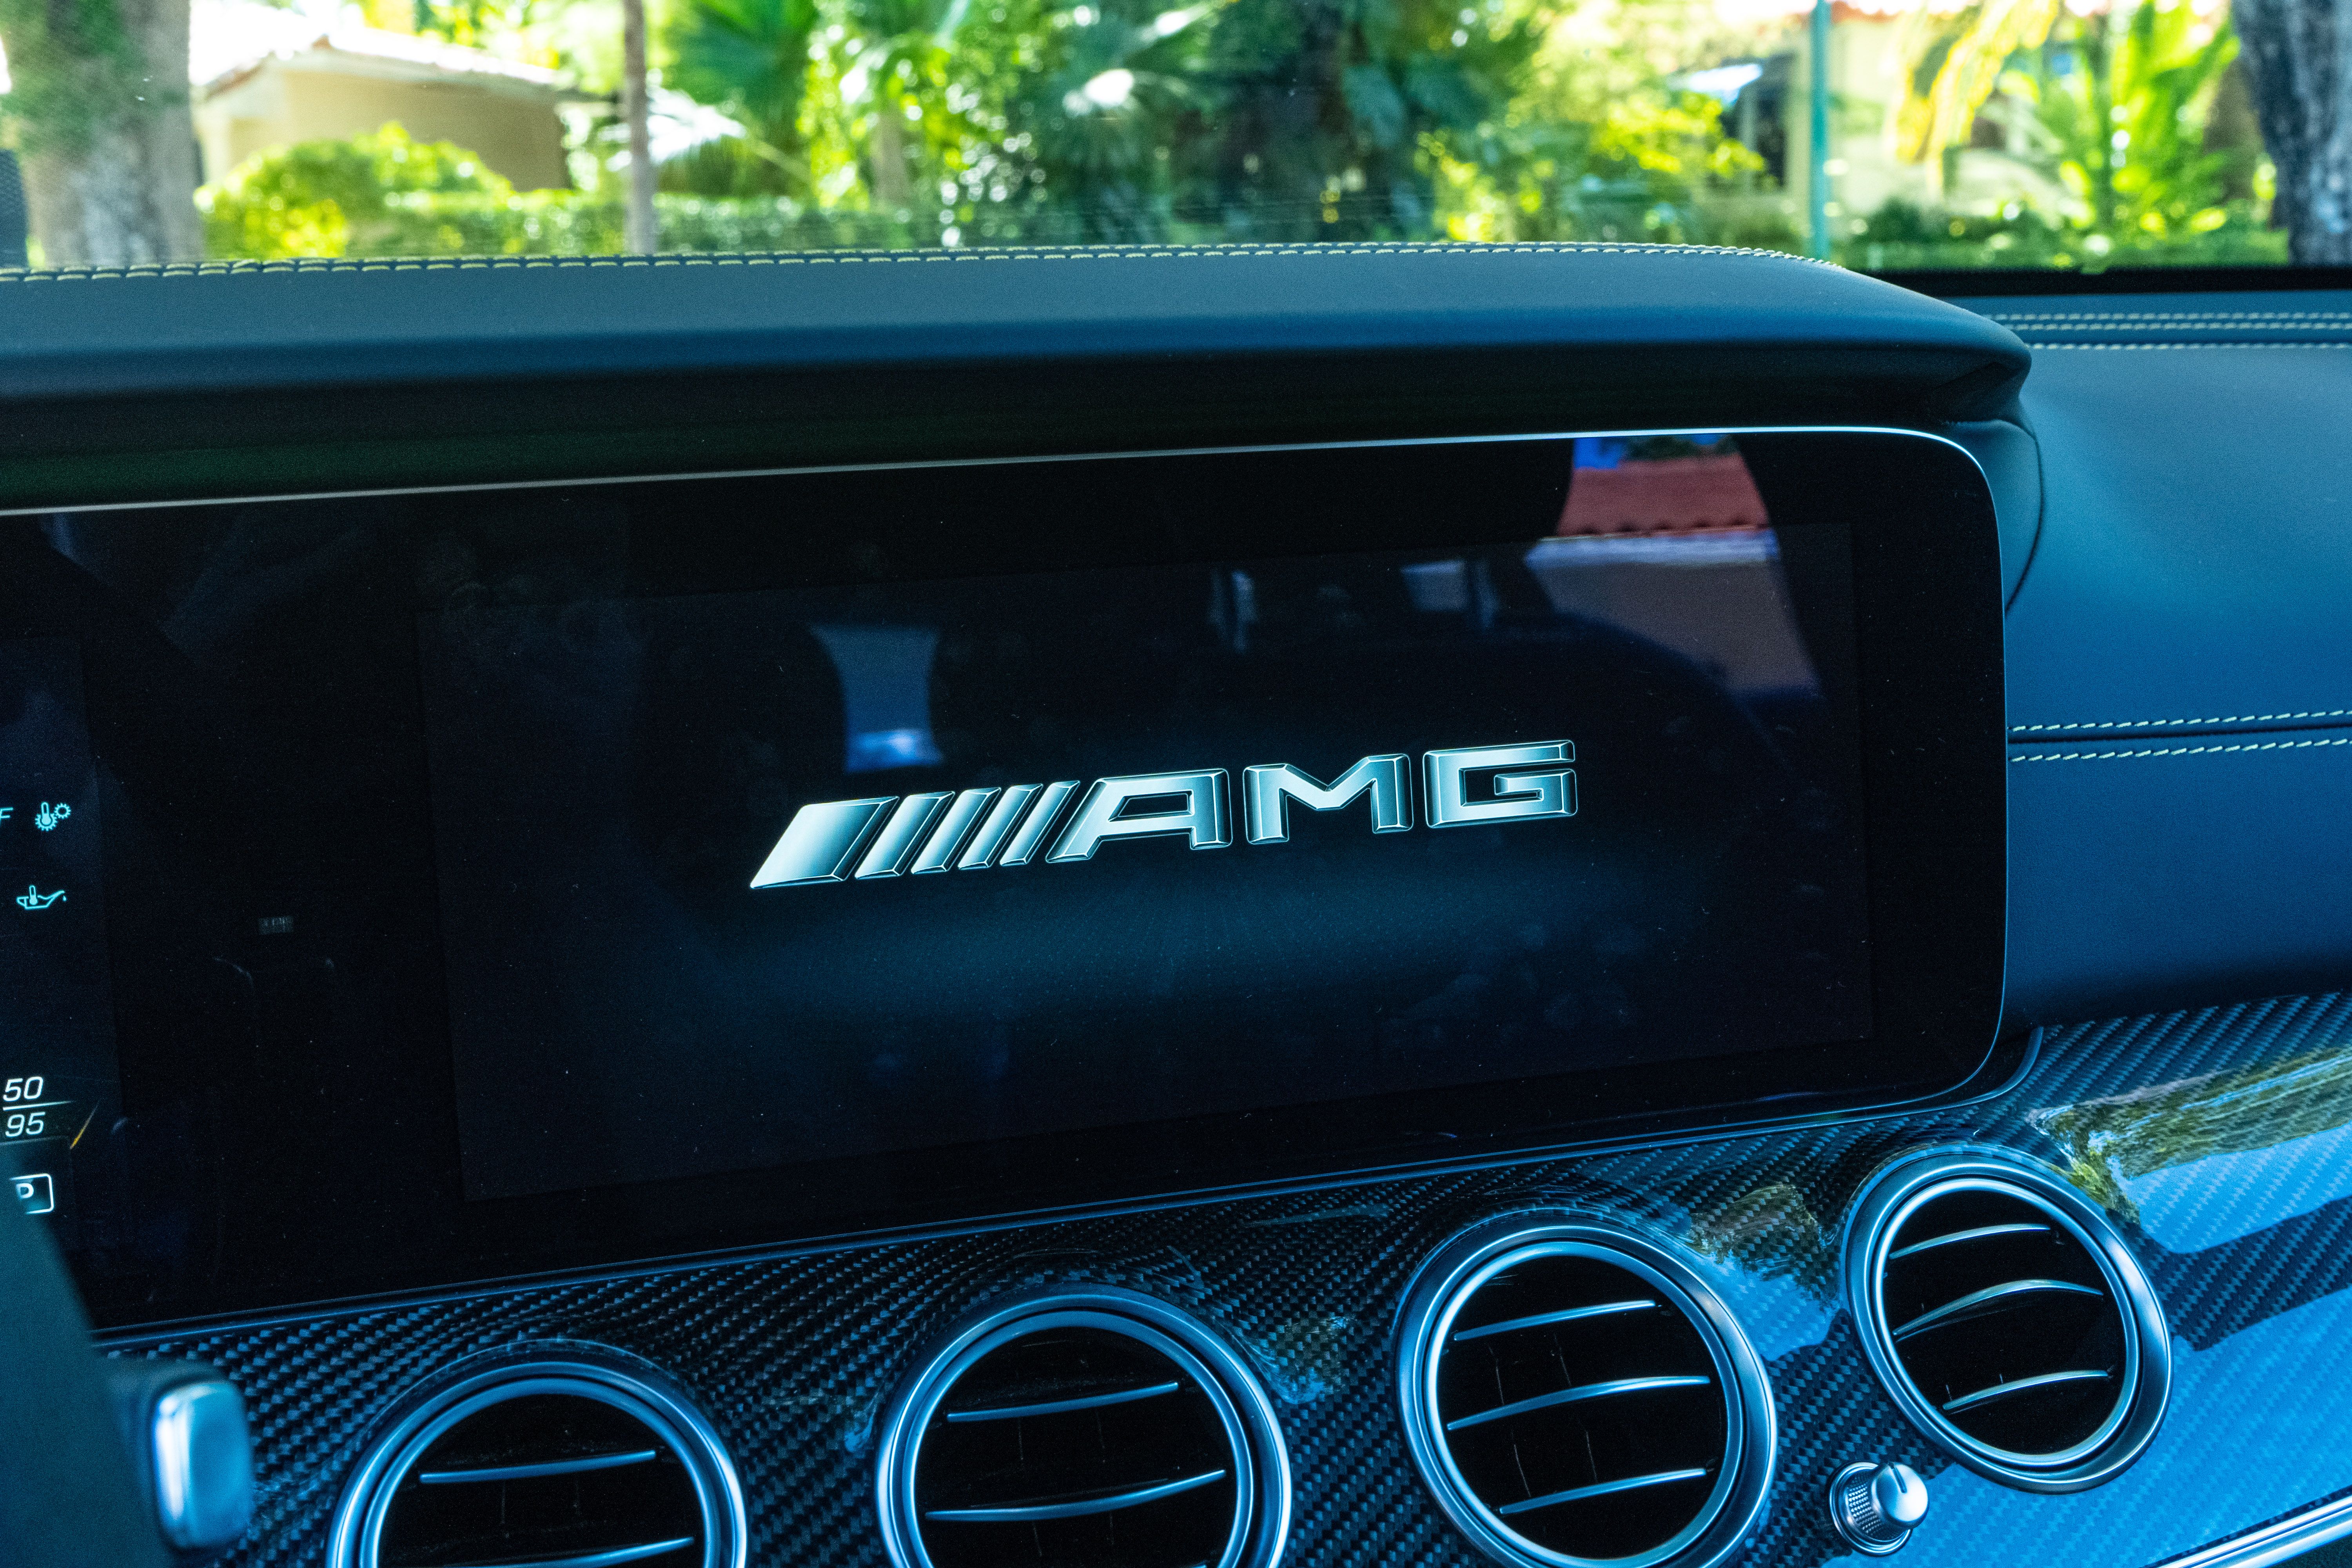 2021 Mercedes-AMG E63 S Wagon